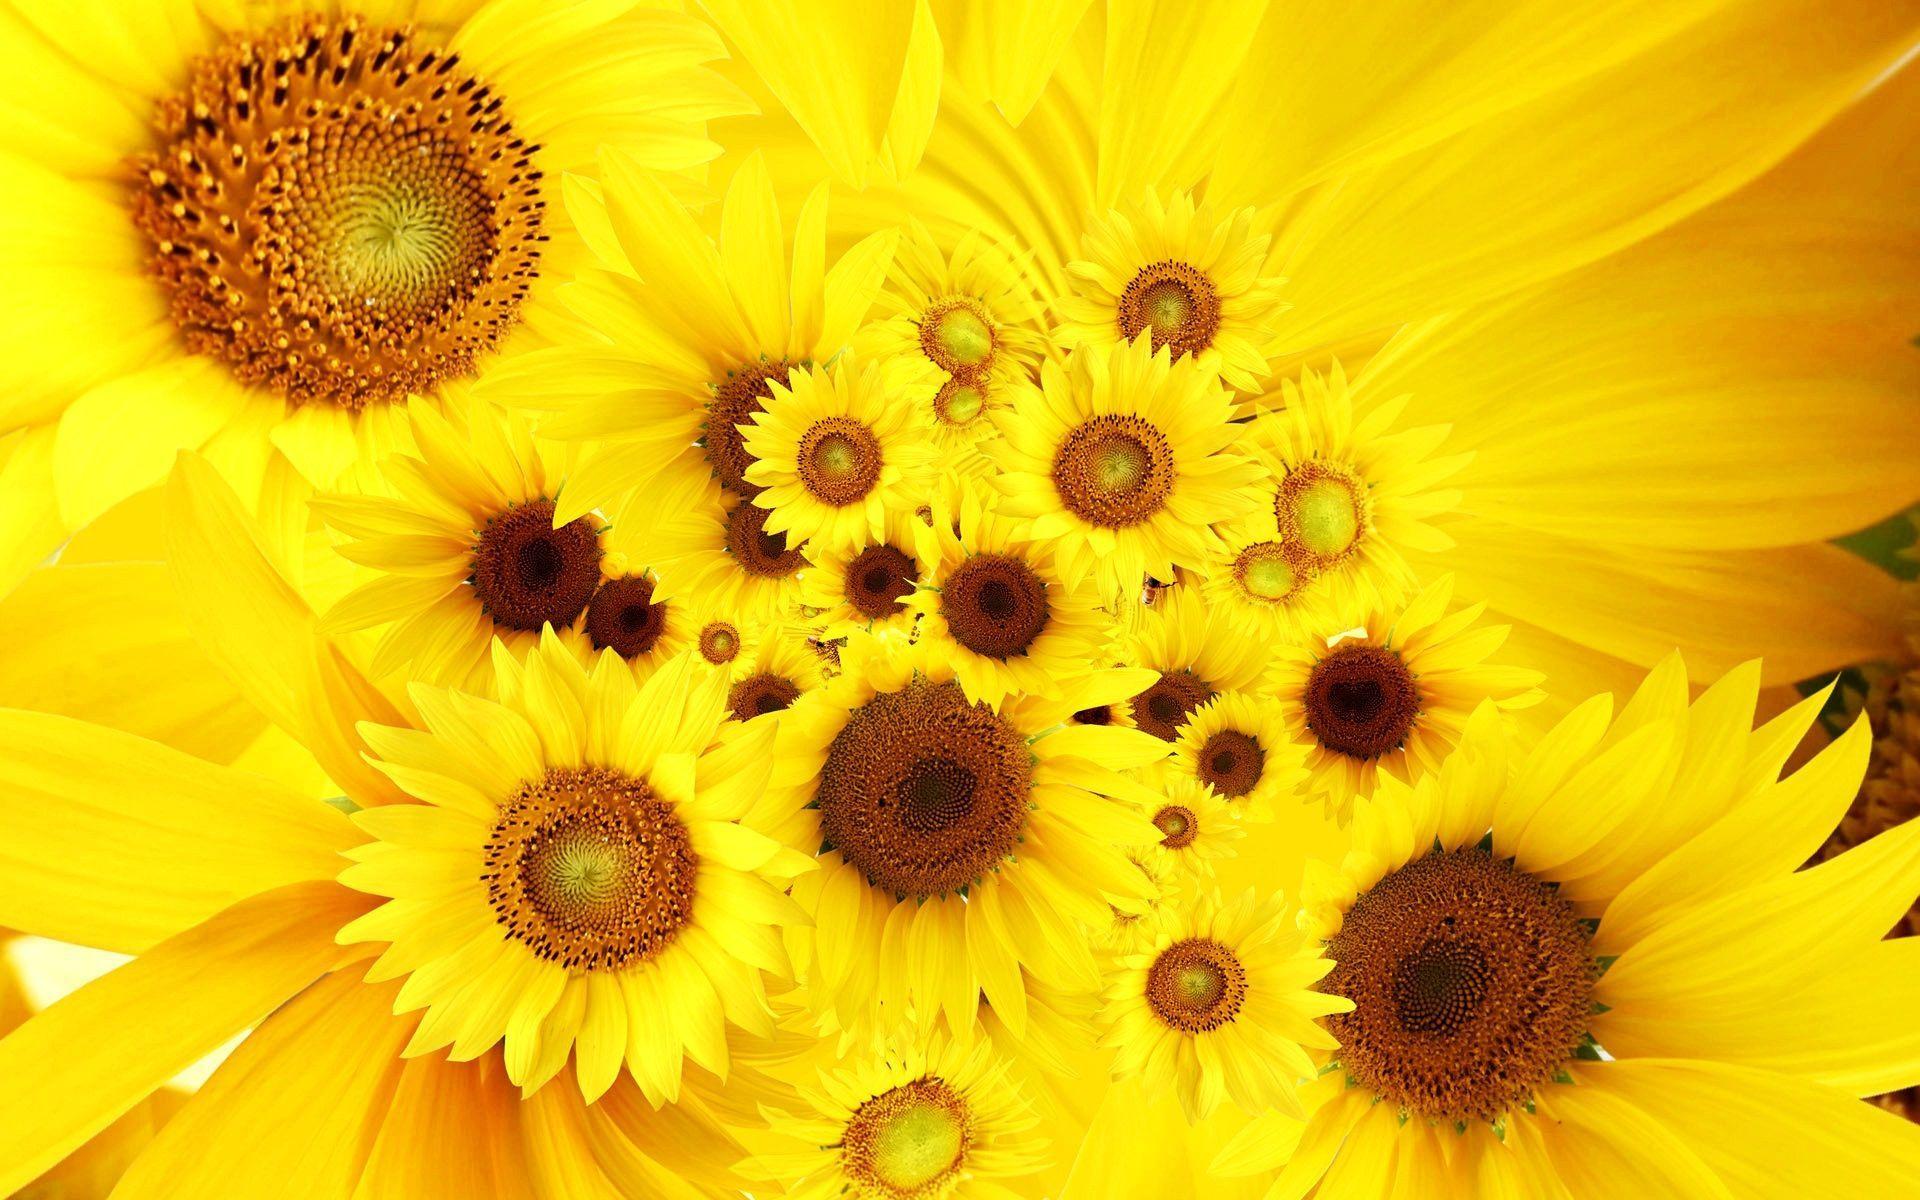 Cool Sunflowers Yellow Bright HD Desktop Background. HD